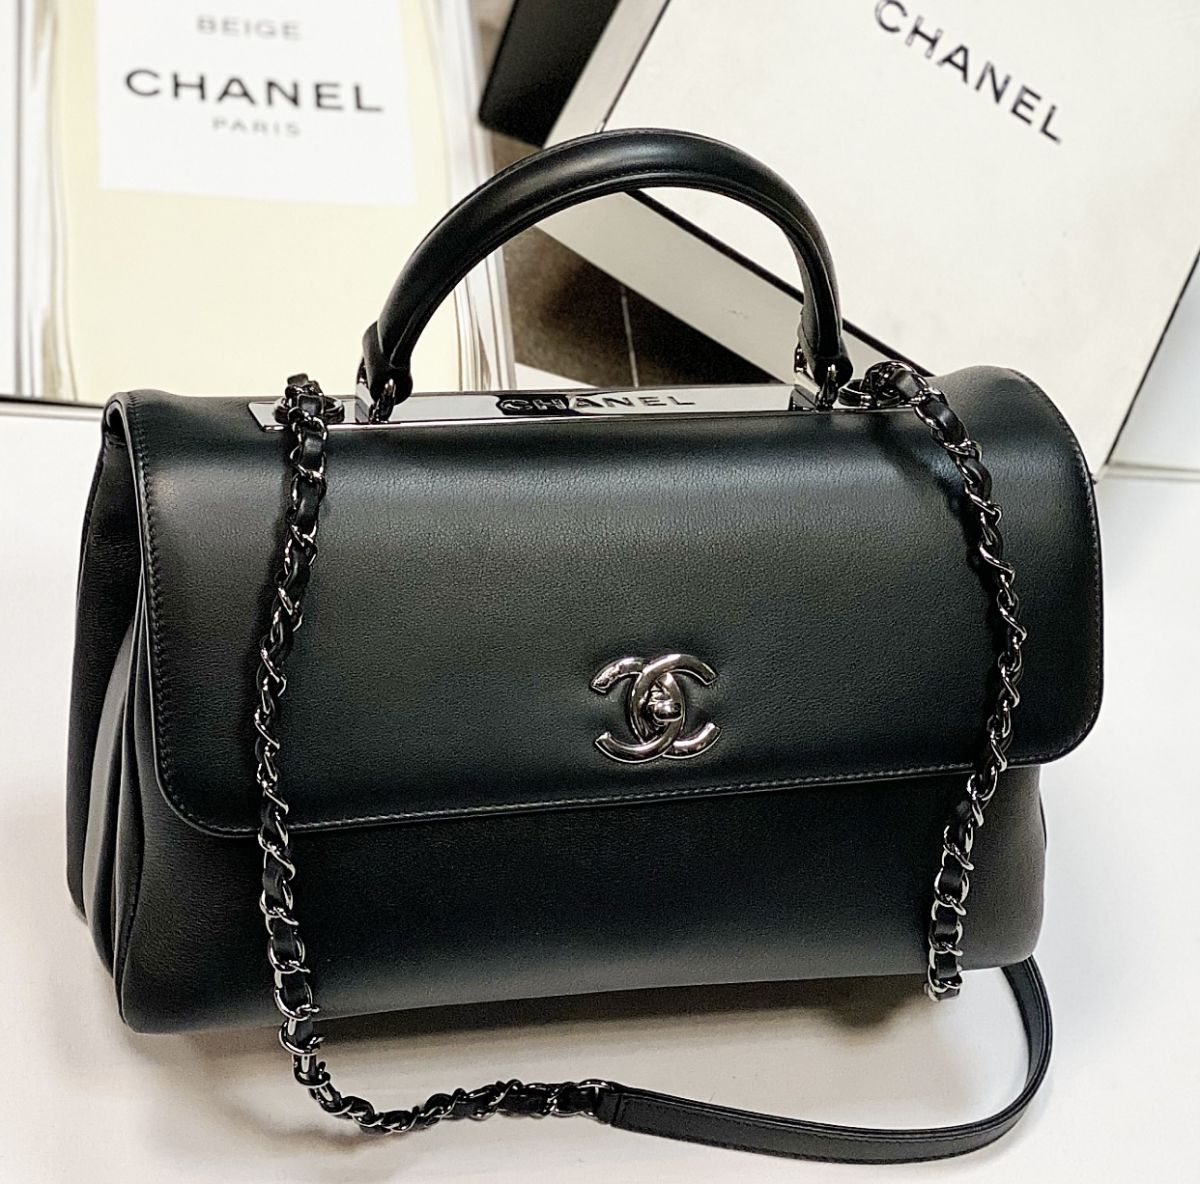 Сумка Chanel размер 30/20 цена 307 700 руб